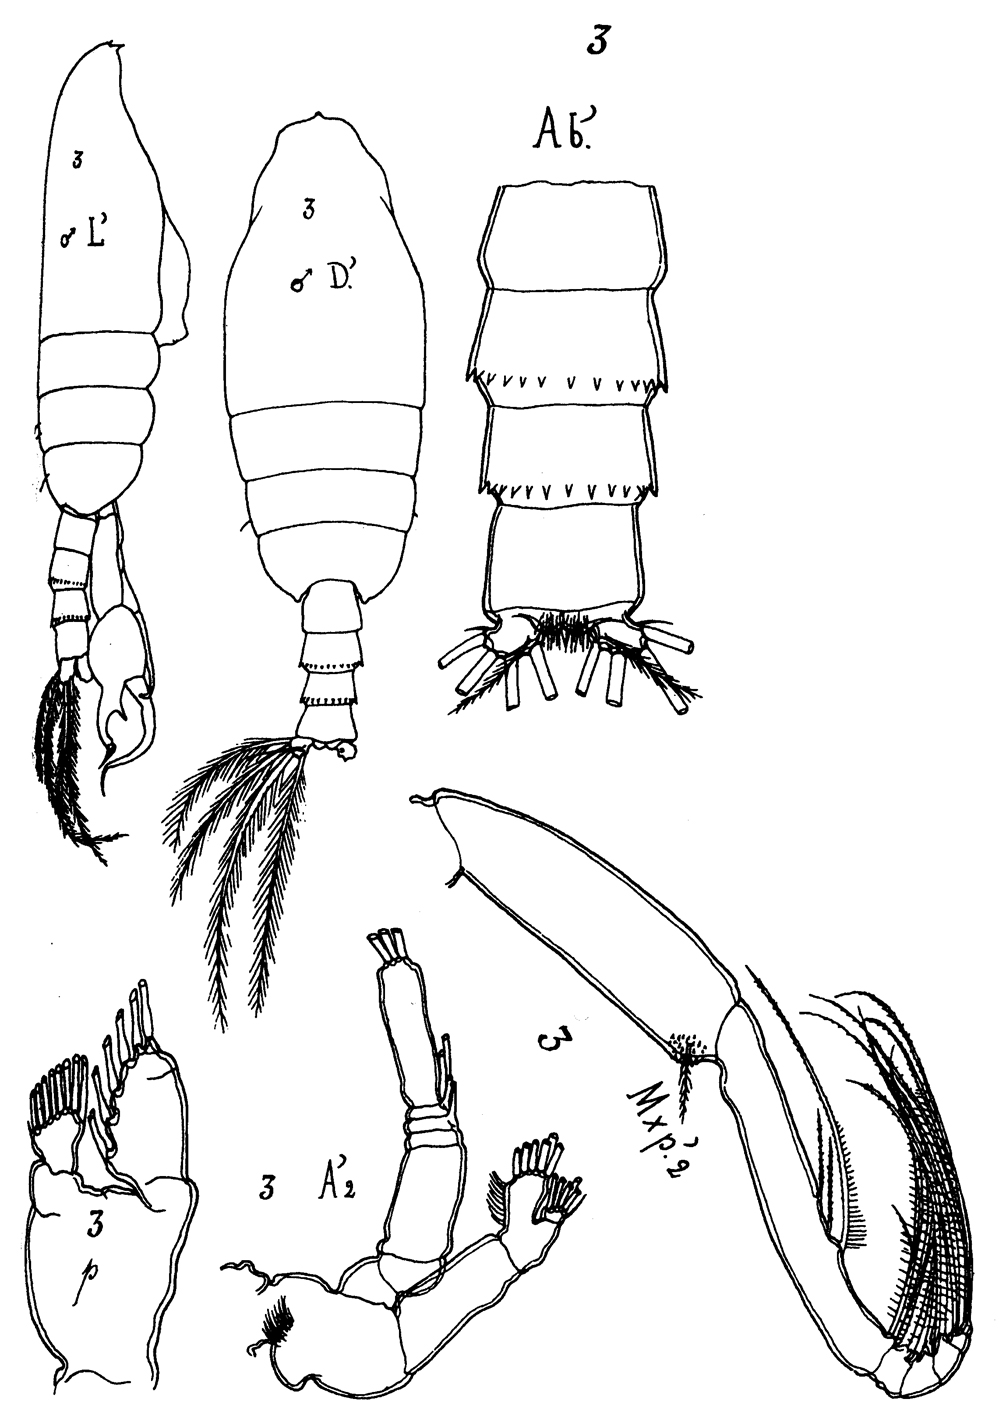 Espce Euchirella amoena - Planche 11 de figures morphologiques